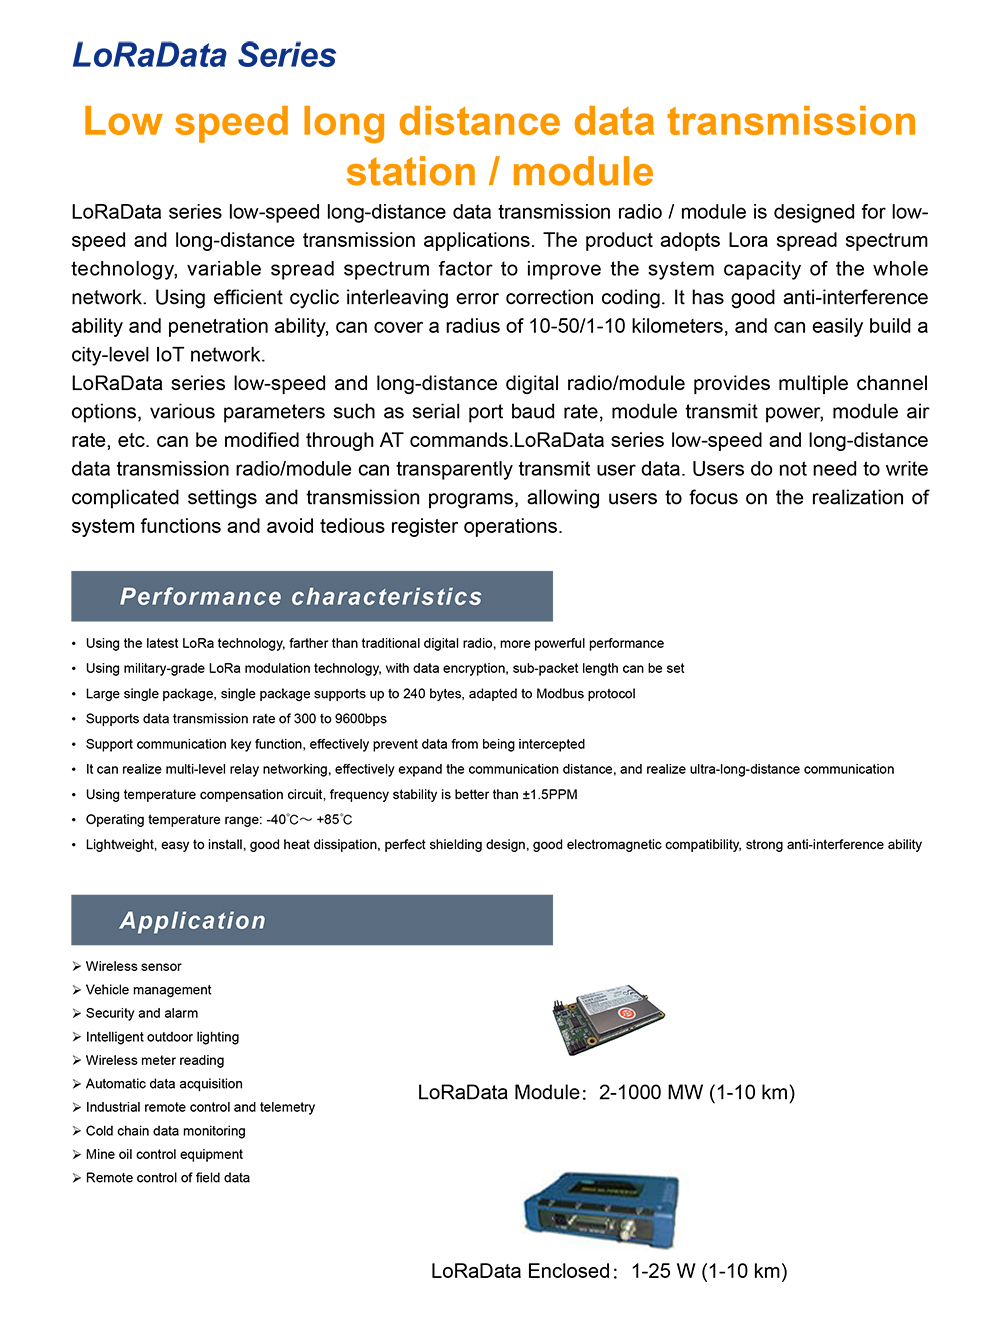 LoRaData Series Low-Speed Long-Distance Data Transmission Radio /Module(图1)